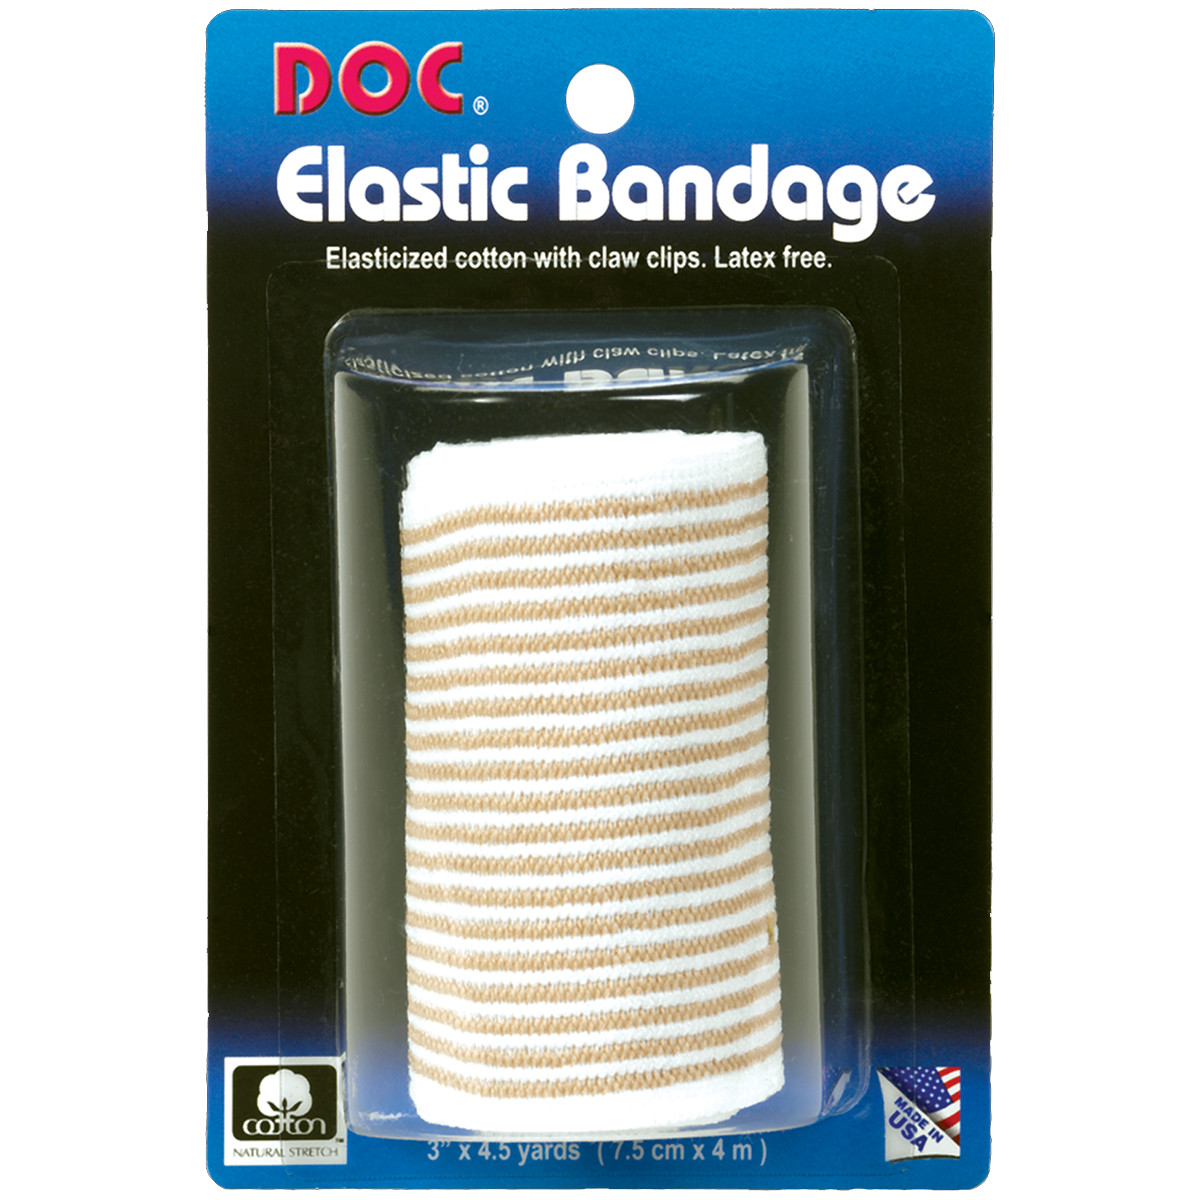 DOC Elastic Bandage alternate view